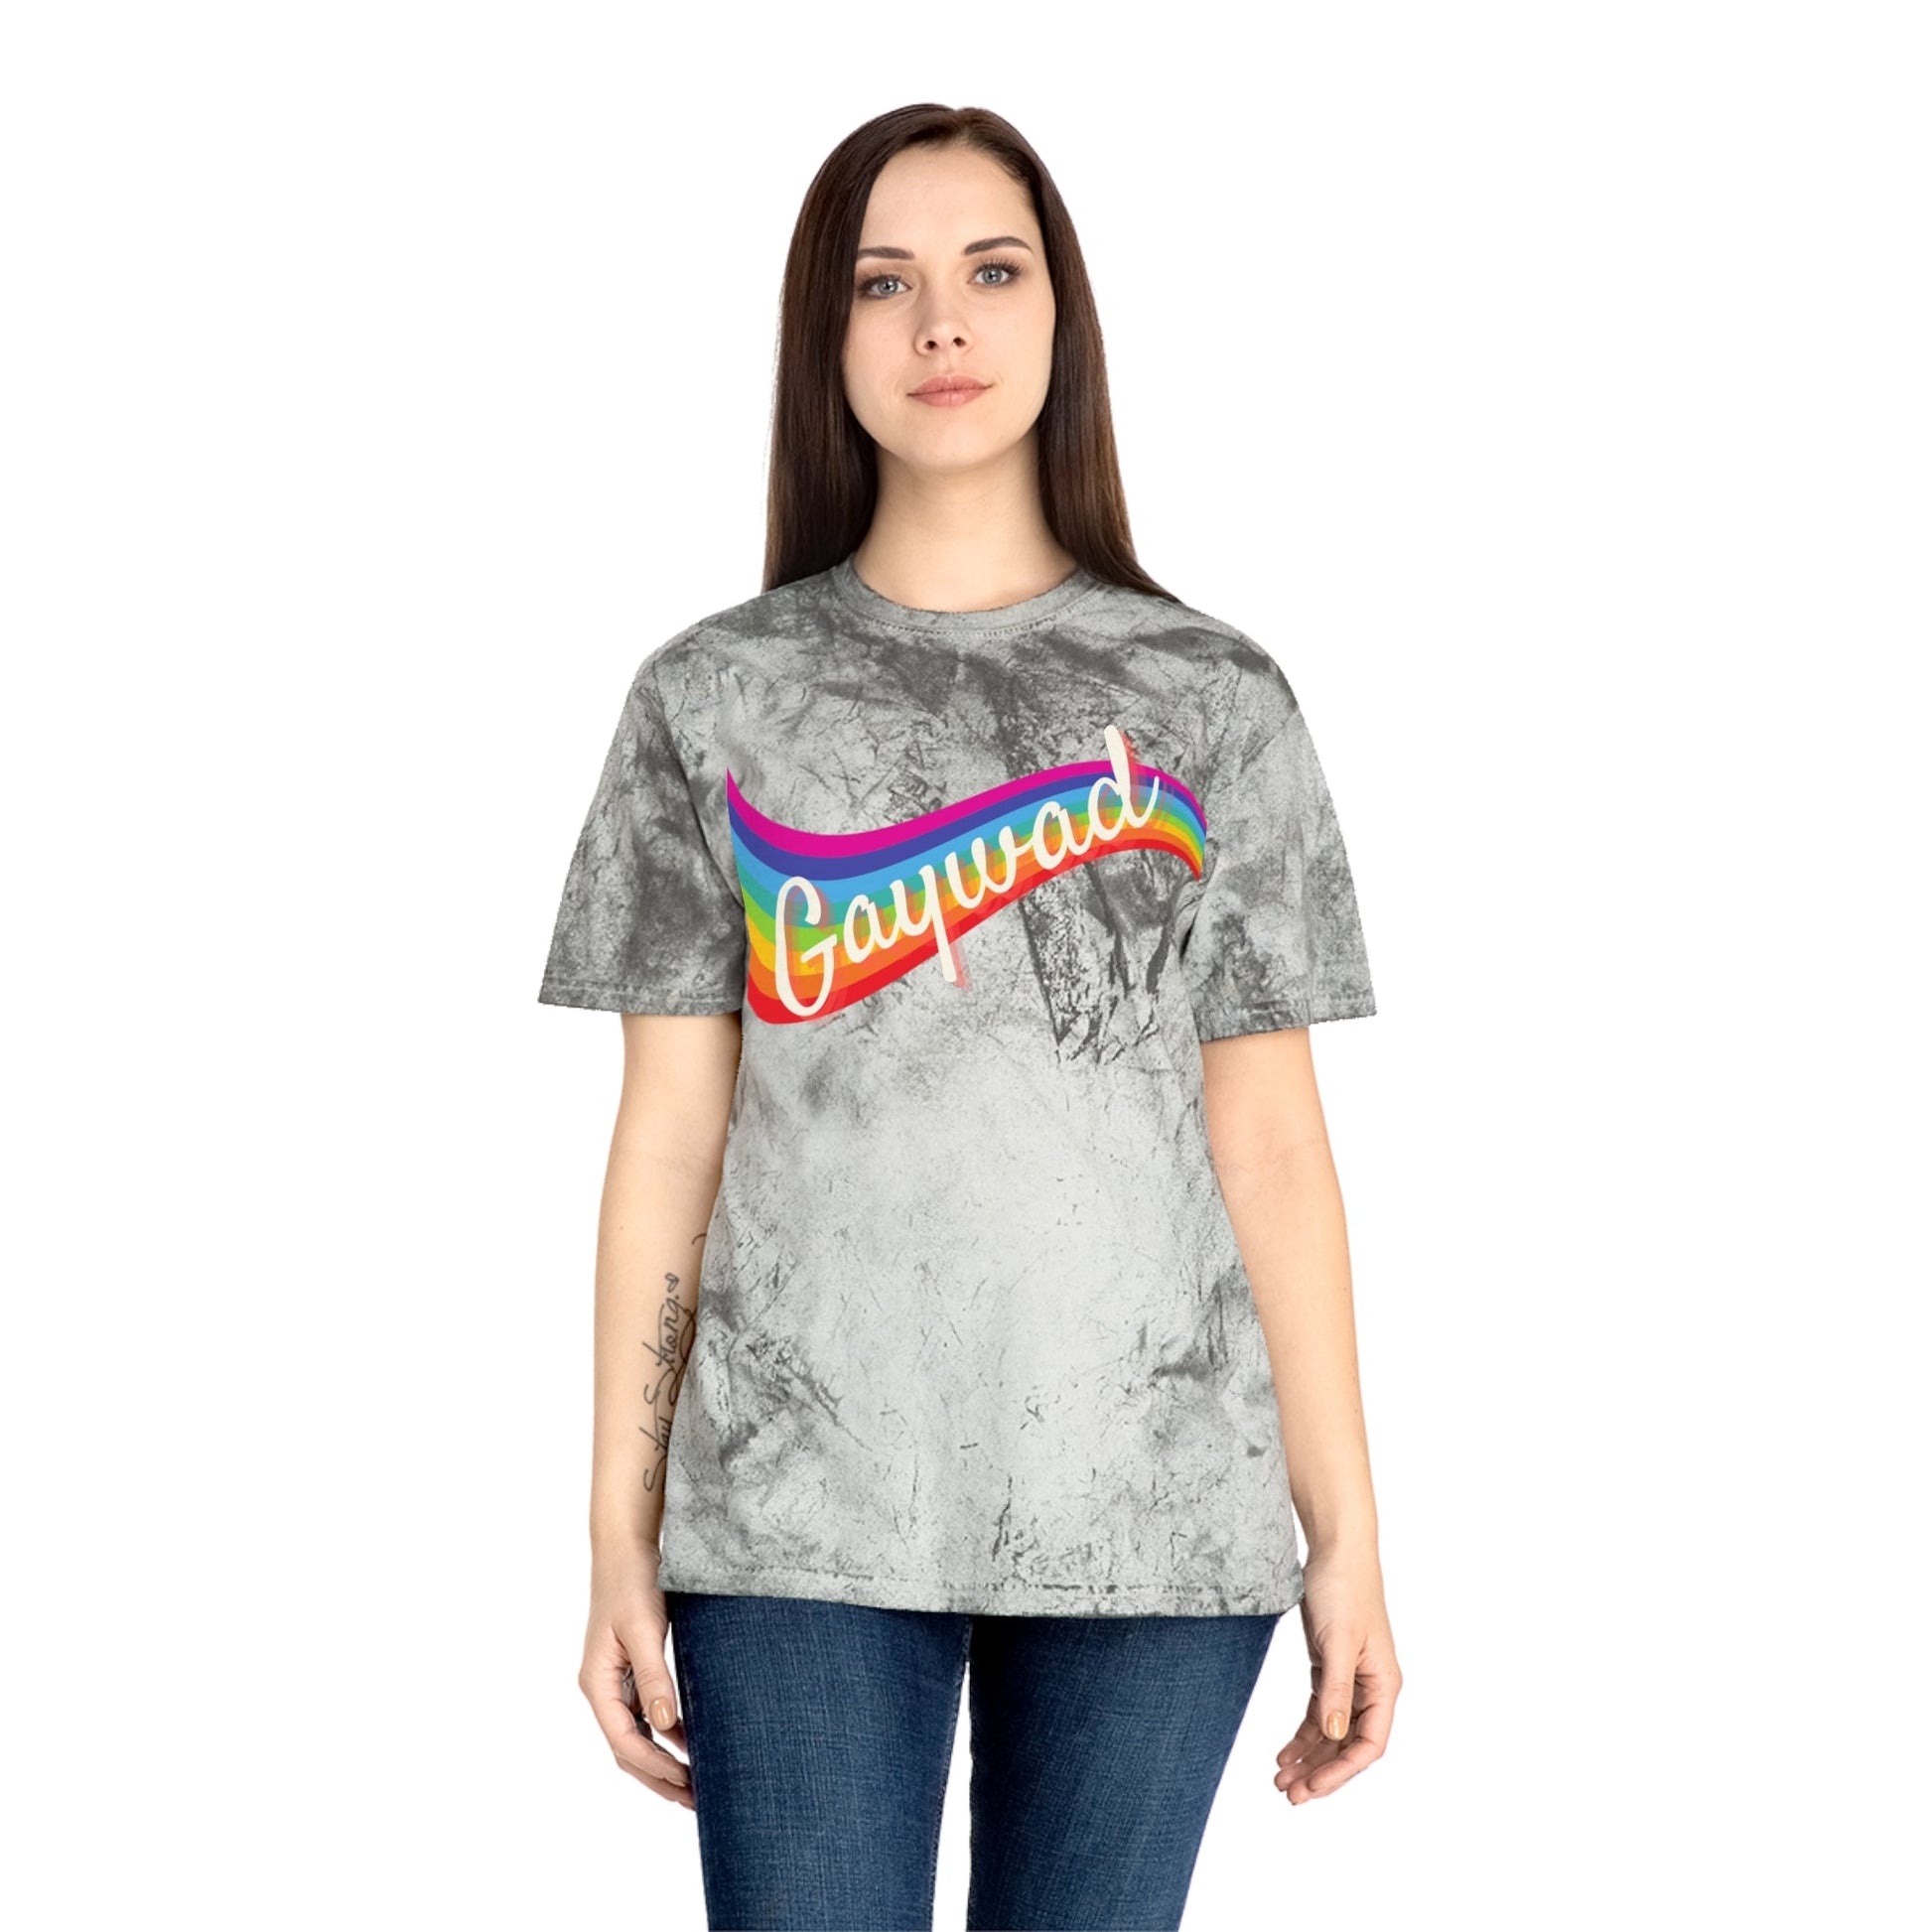 Gaywad Unisex Color Blast T-Shirt